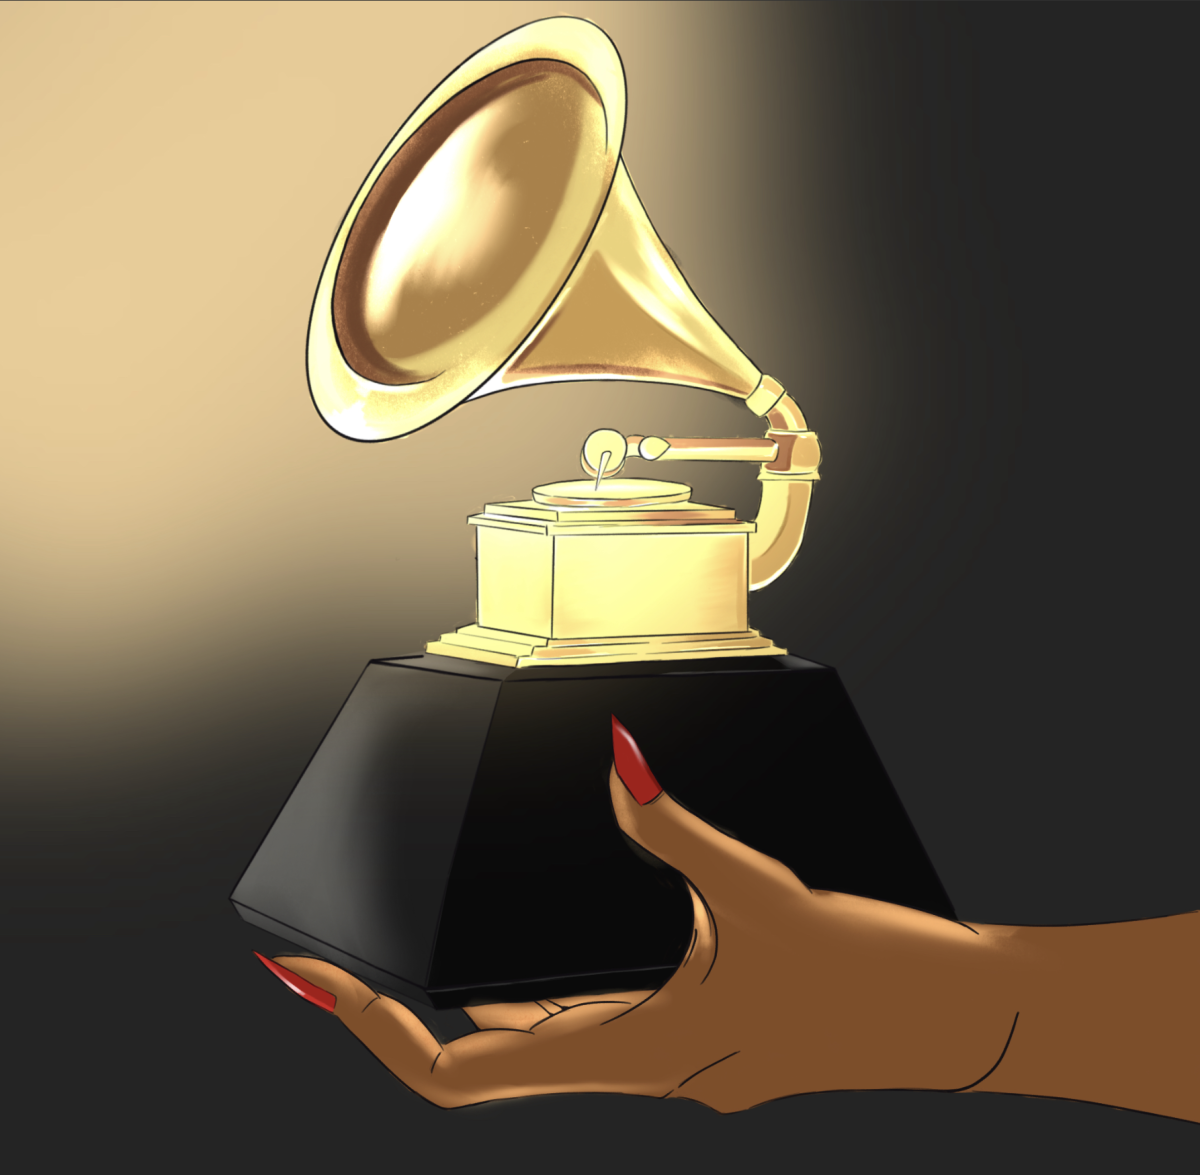 An+illustration+of+a+Grammy+trophy.+